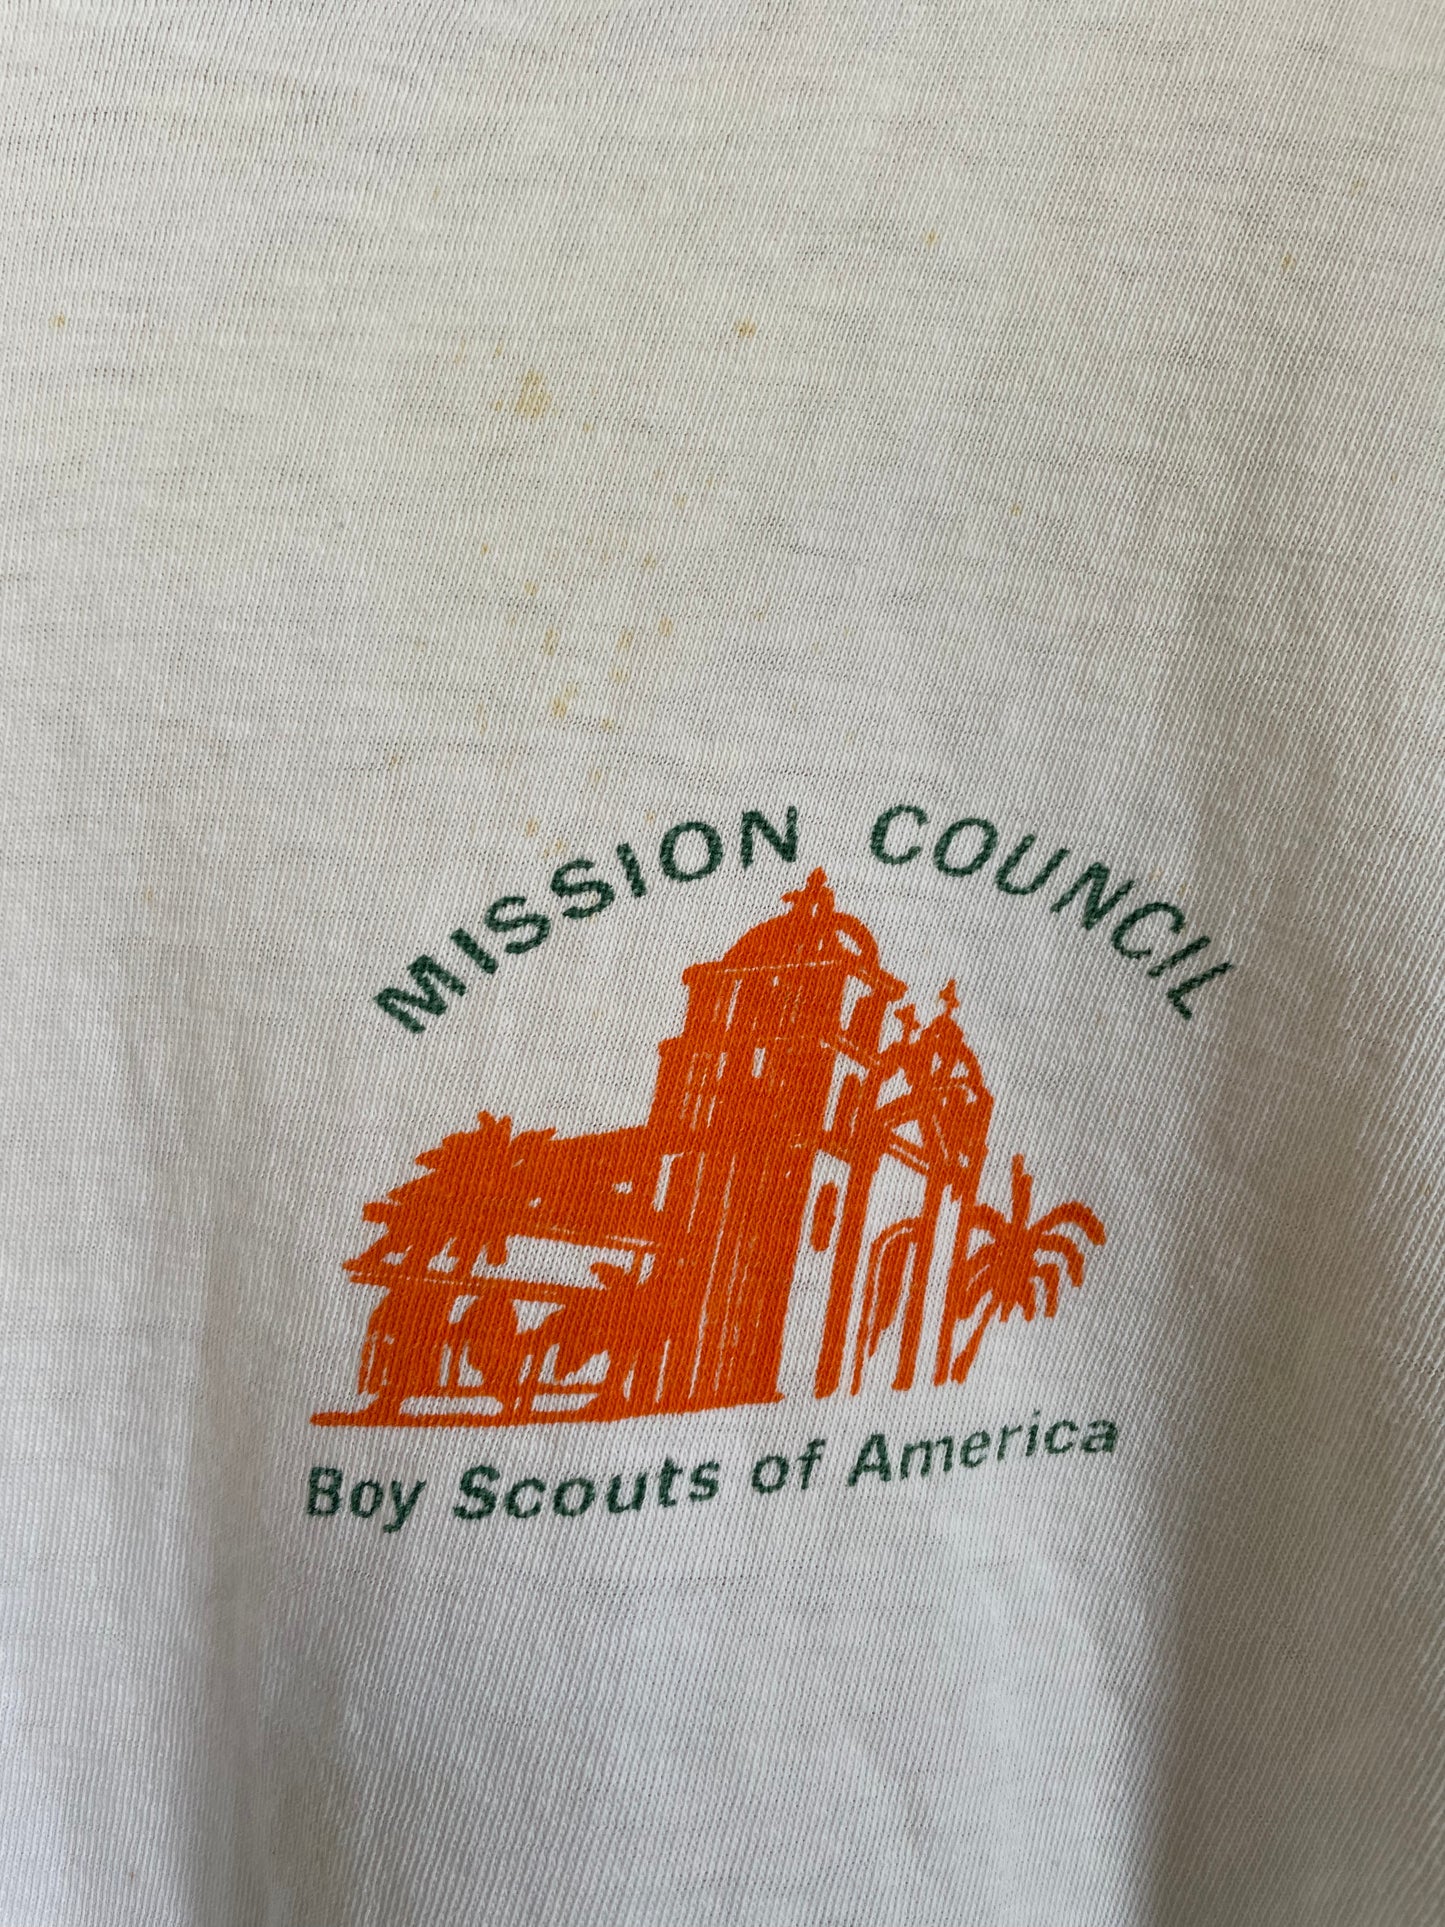 70s Mission Council BSA Tee